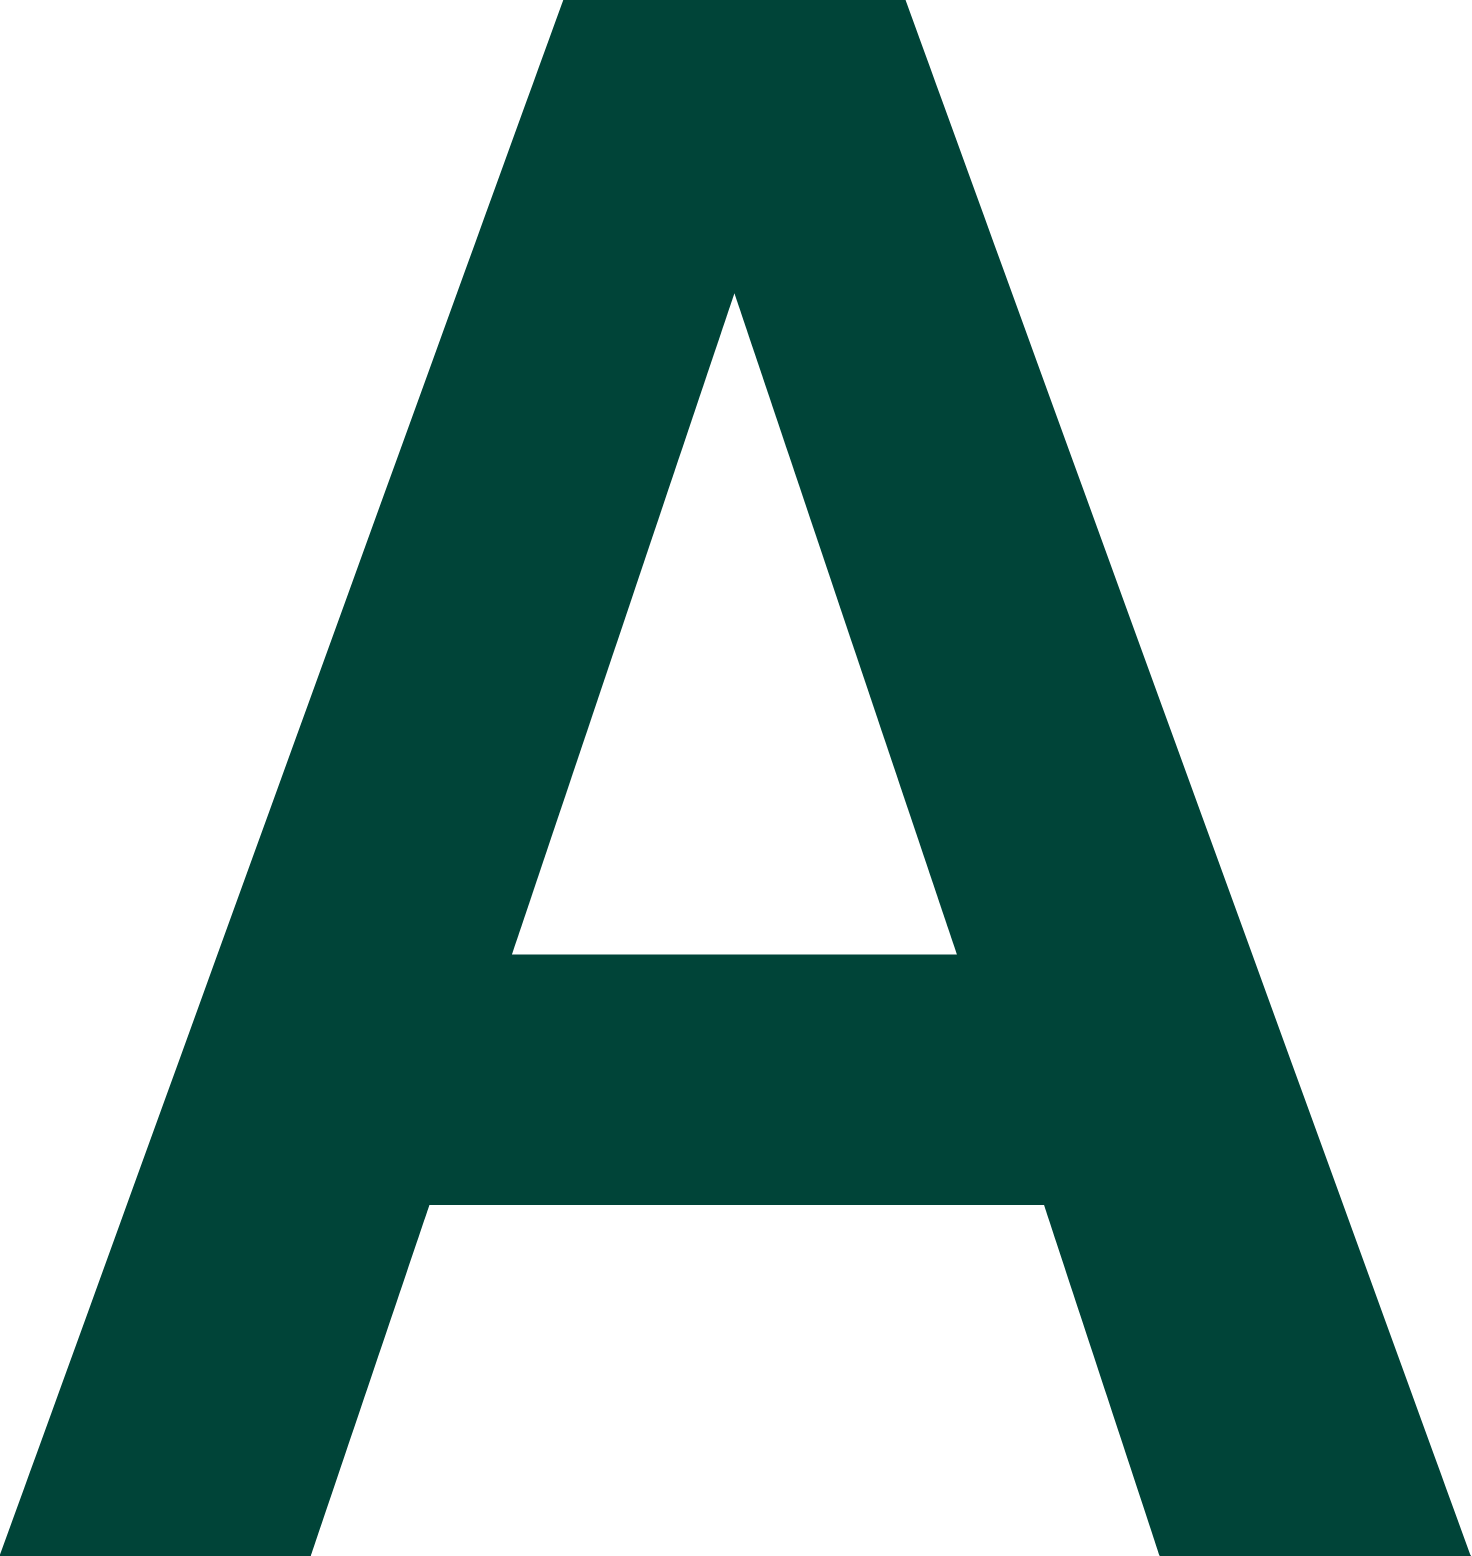 Allied Properties REIT logo (transparent PNG)